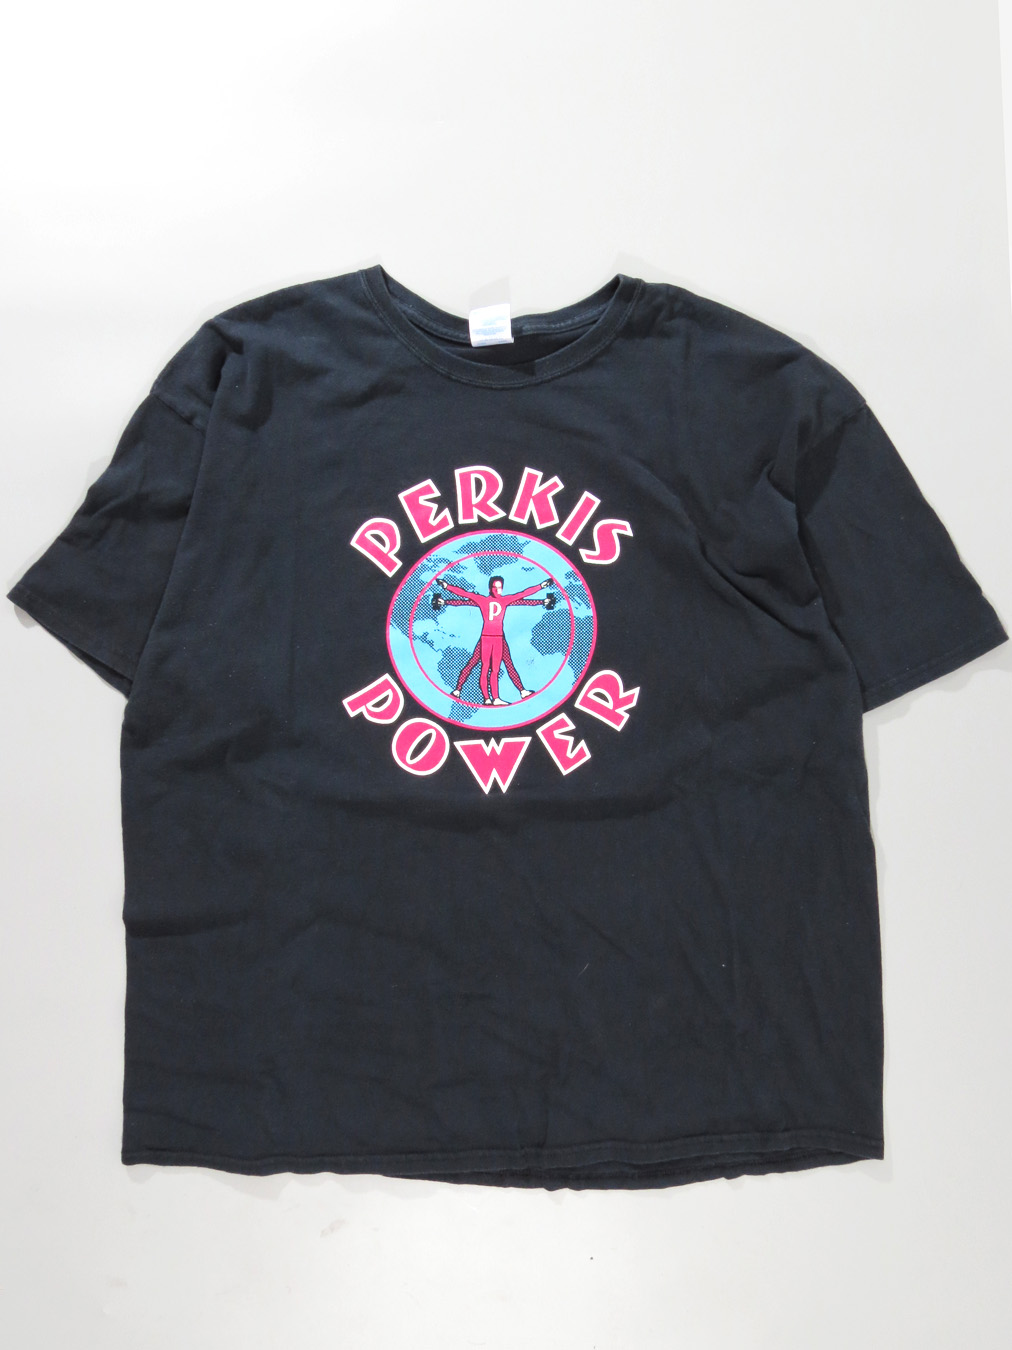 Perkis Power 'Im Perkisizing' Movie T-Shirt - 5 Star Vintage